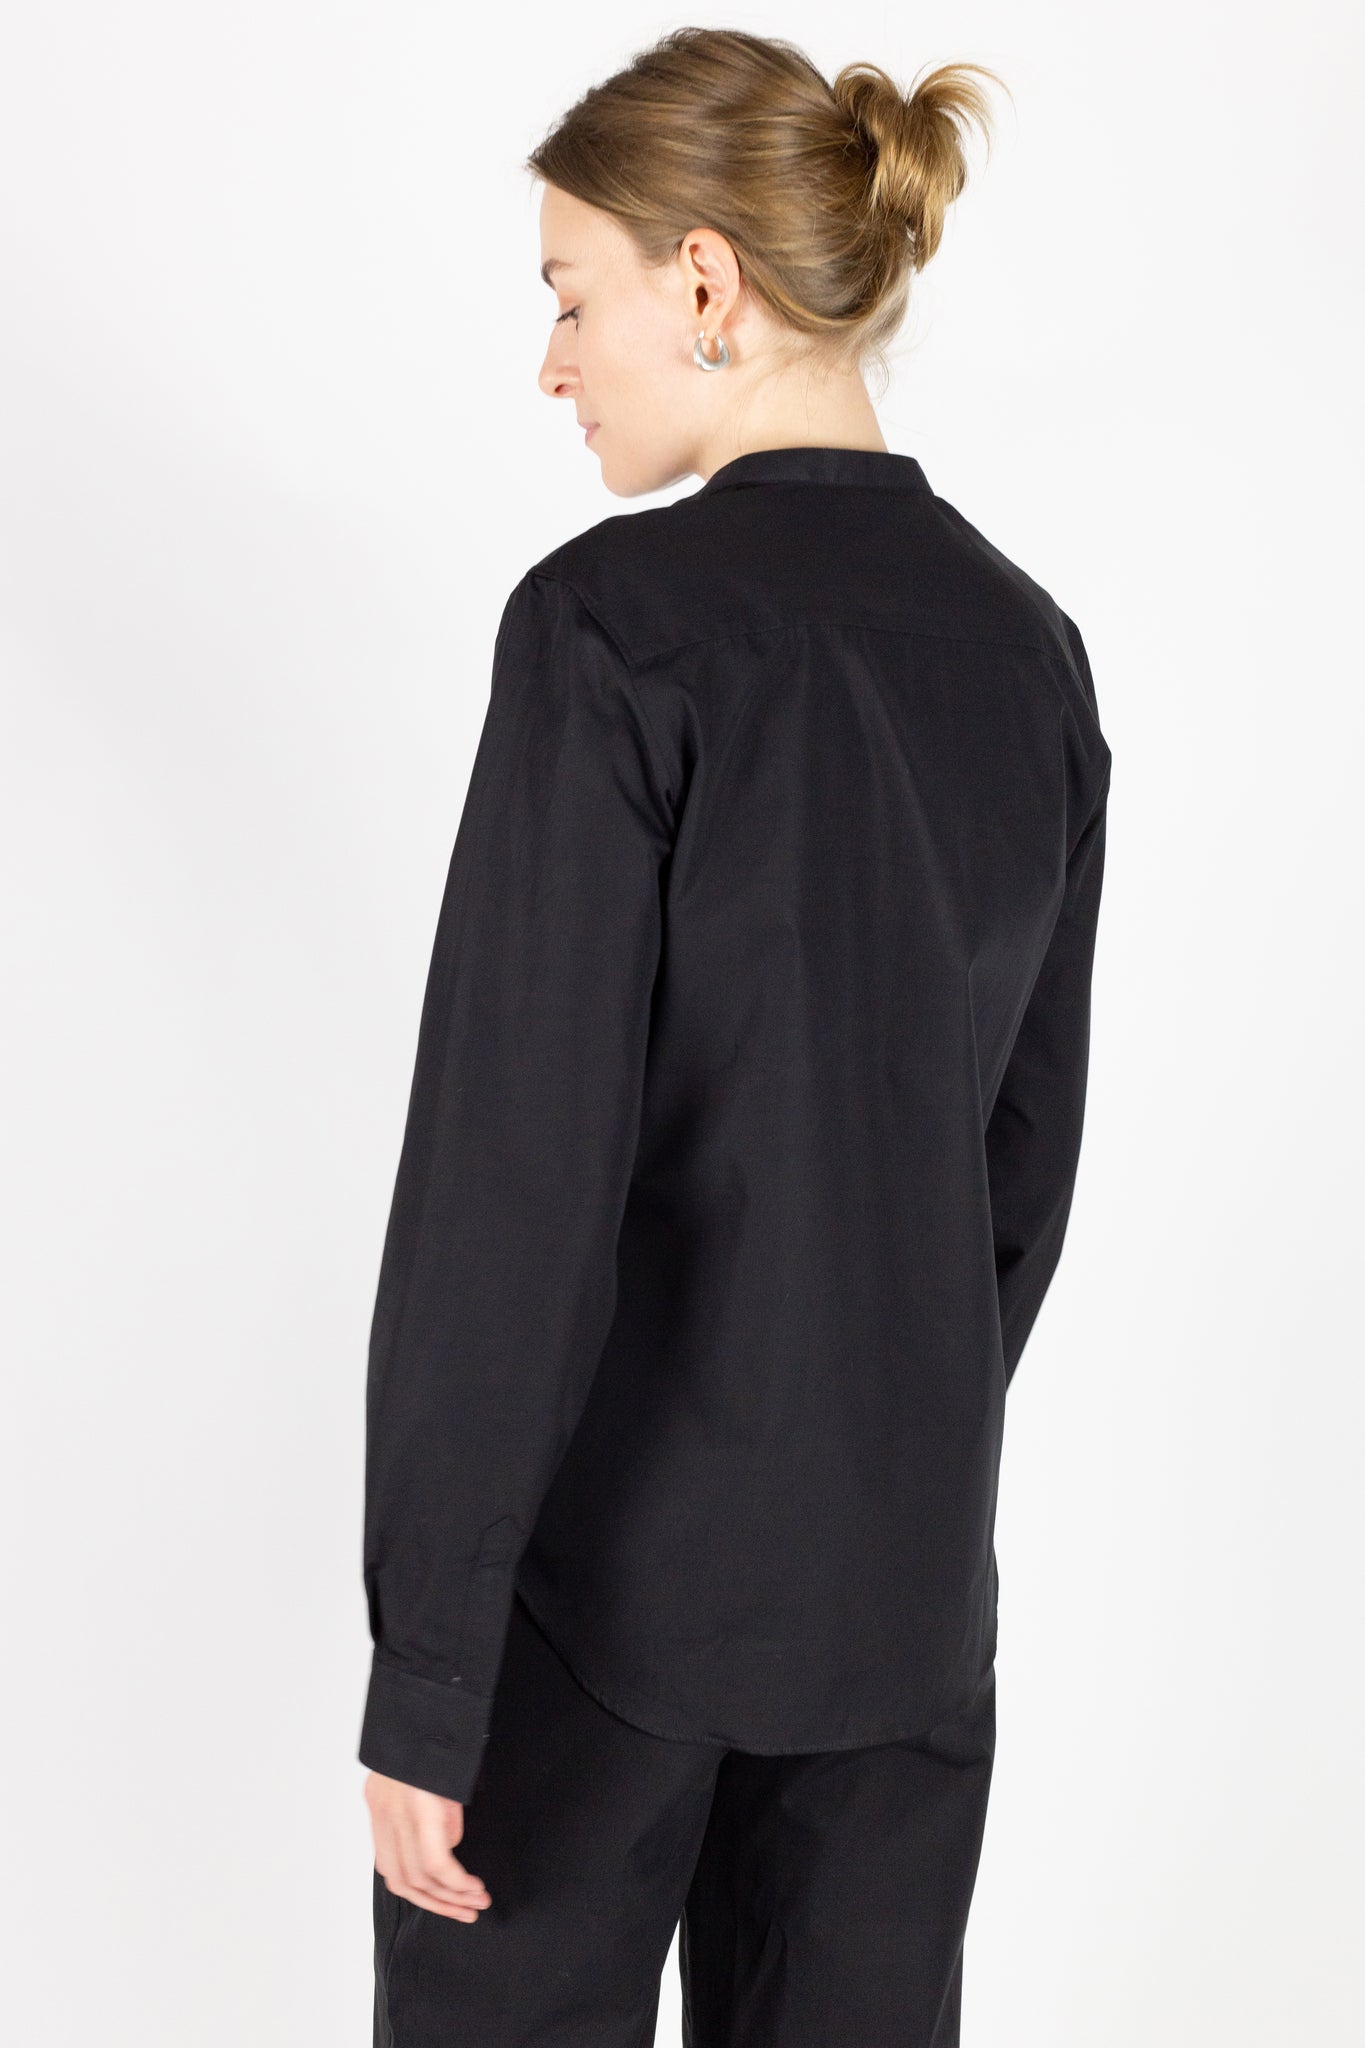 Women's black cotton poplin shirt. Long sleeve, regular collar.